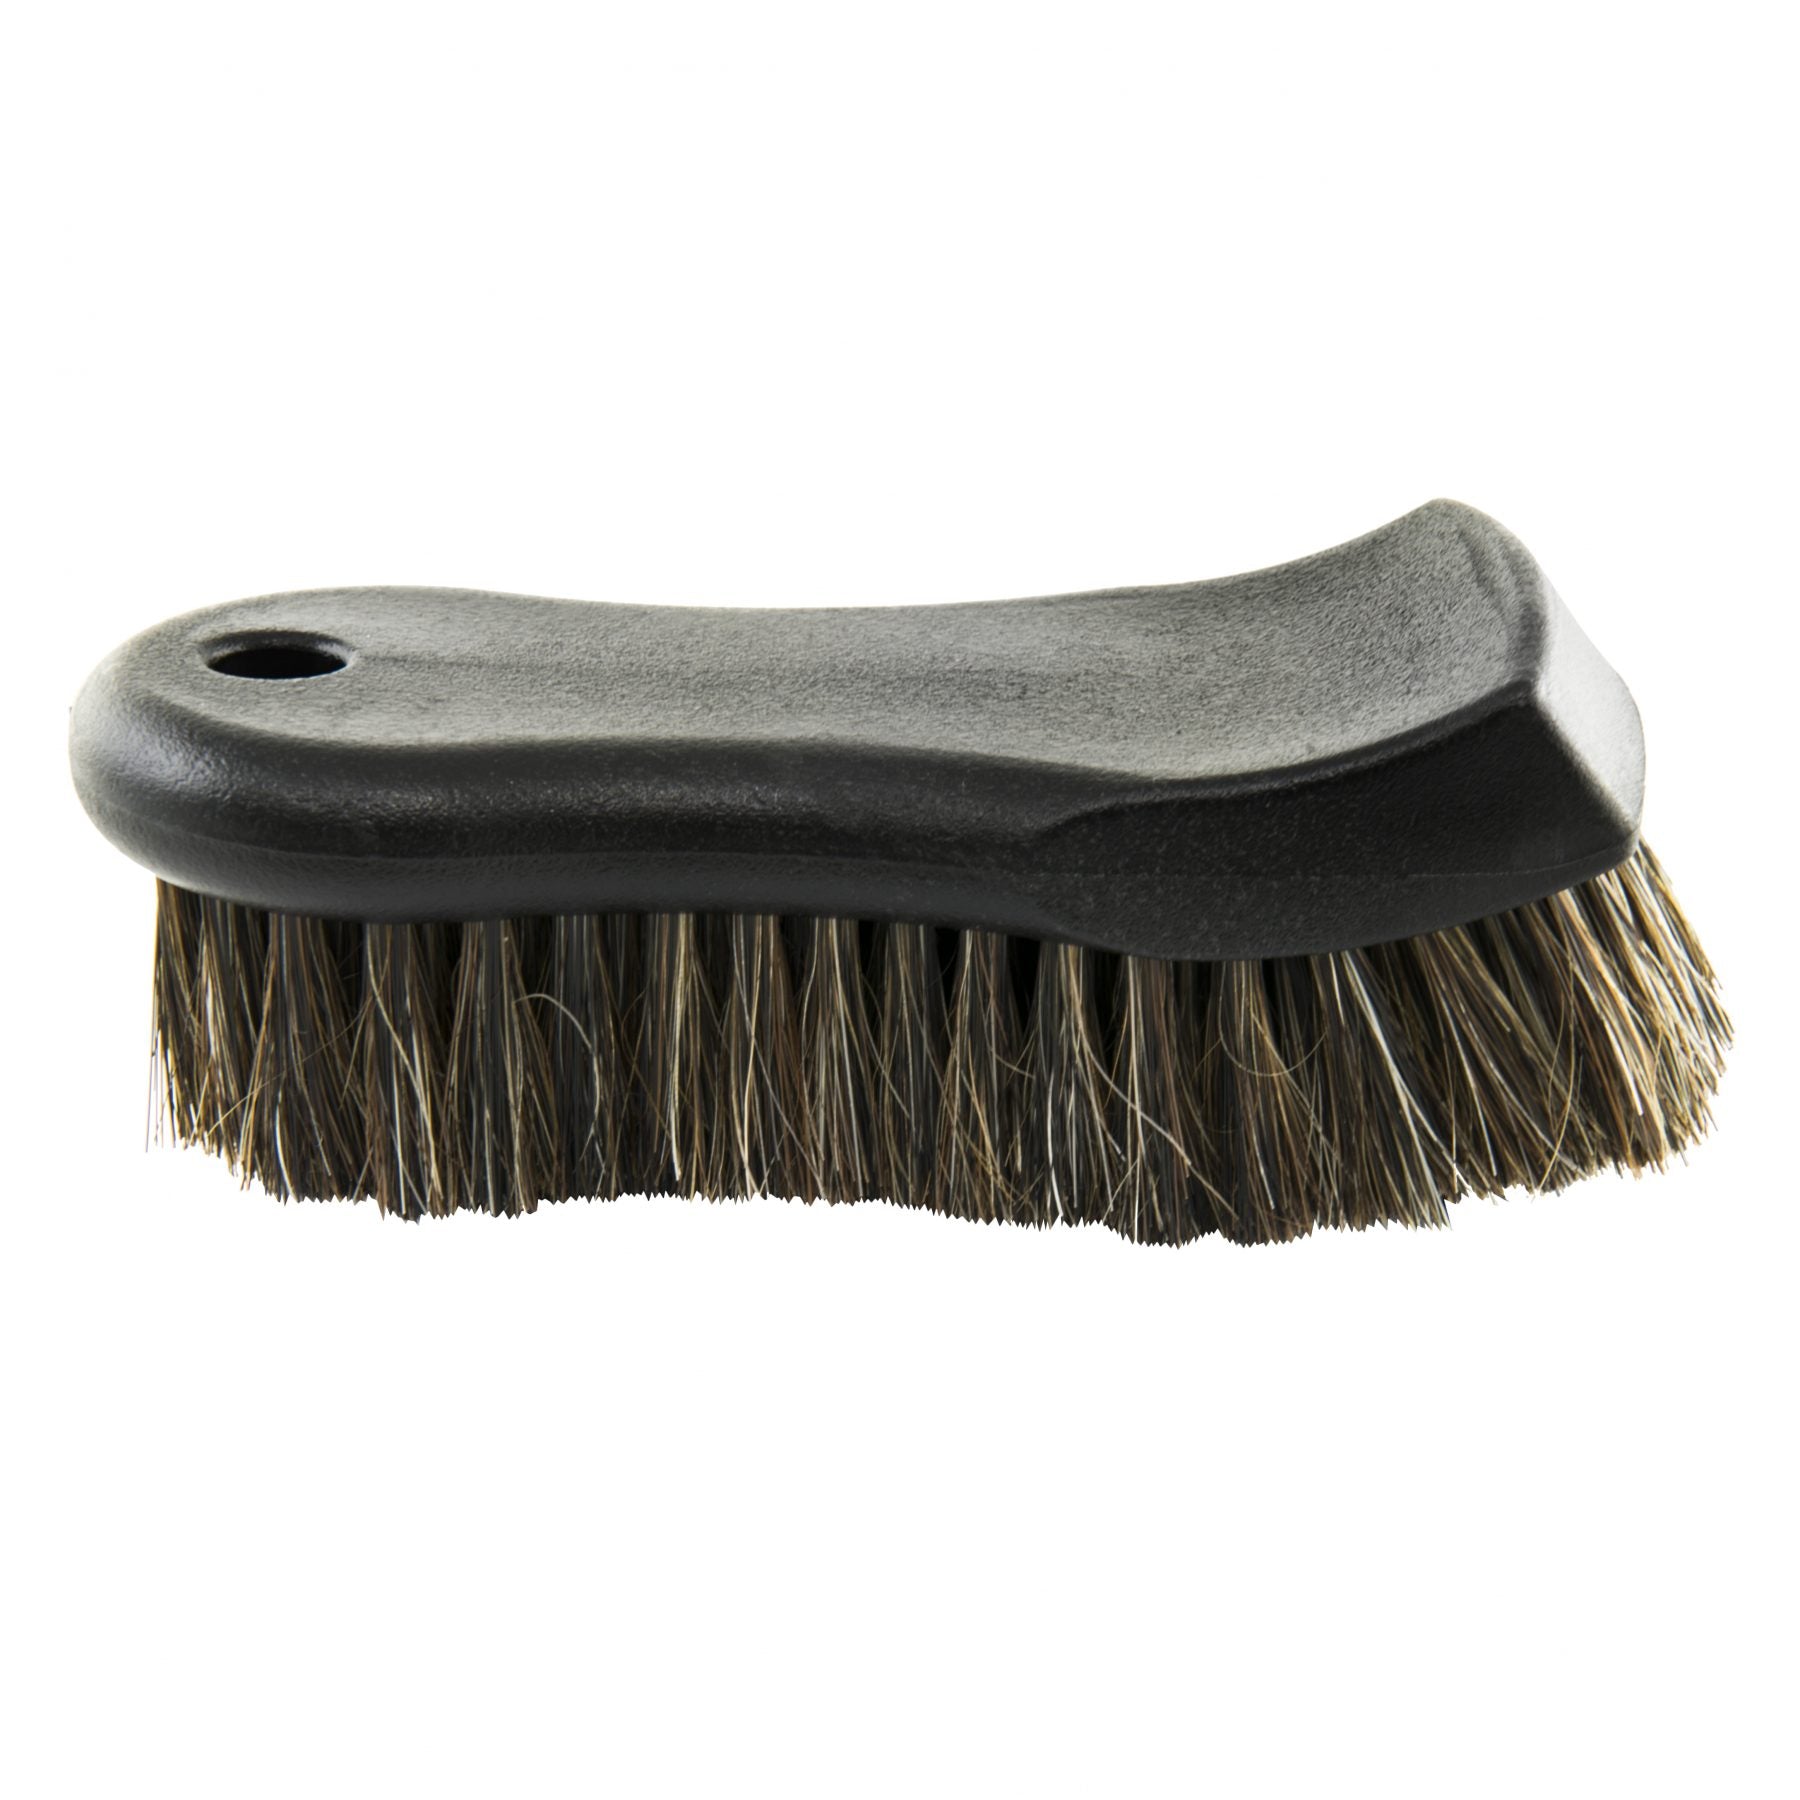 Chemical Guys Premium Select Horse Hair Interior Brush